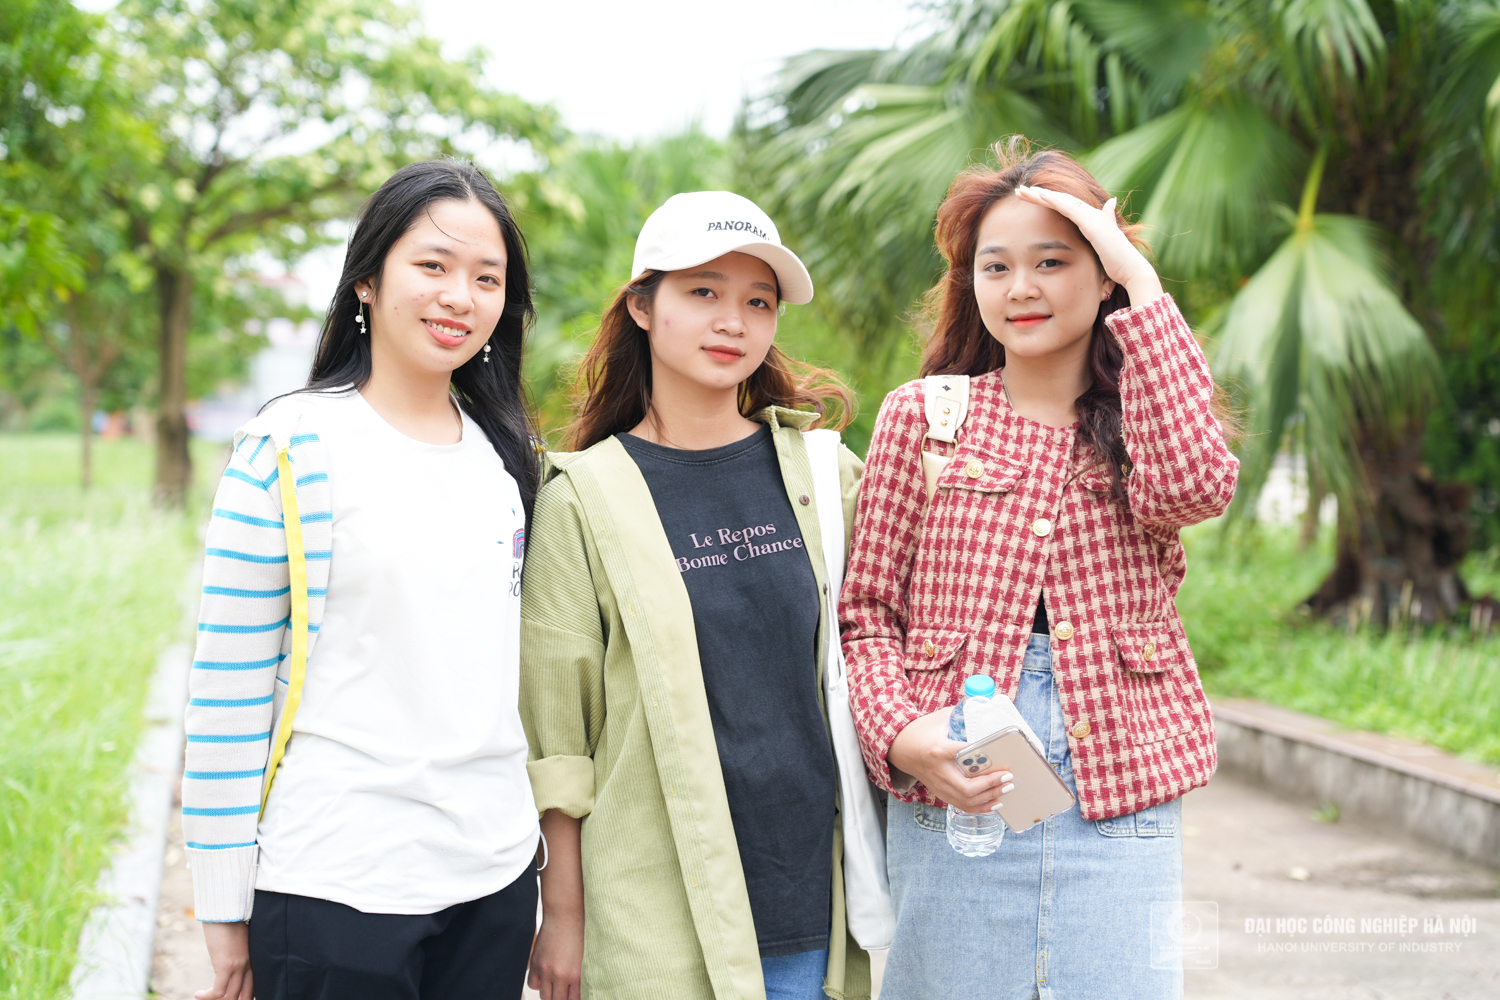 Hanoi University of Industry welcomes over 7,000 new undergraduate students of cohort 17